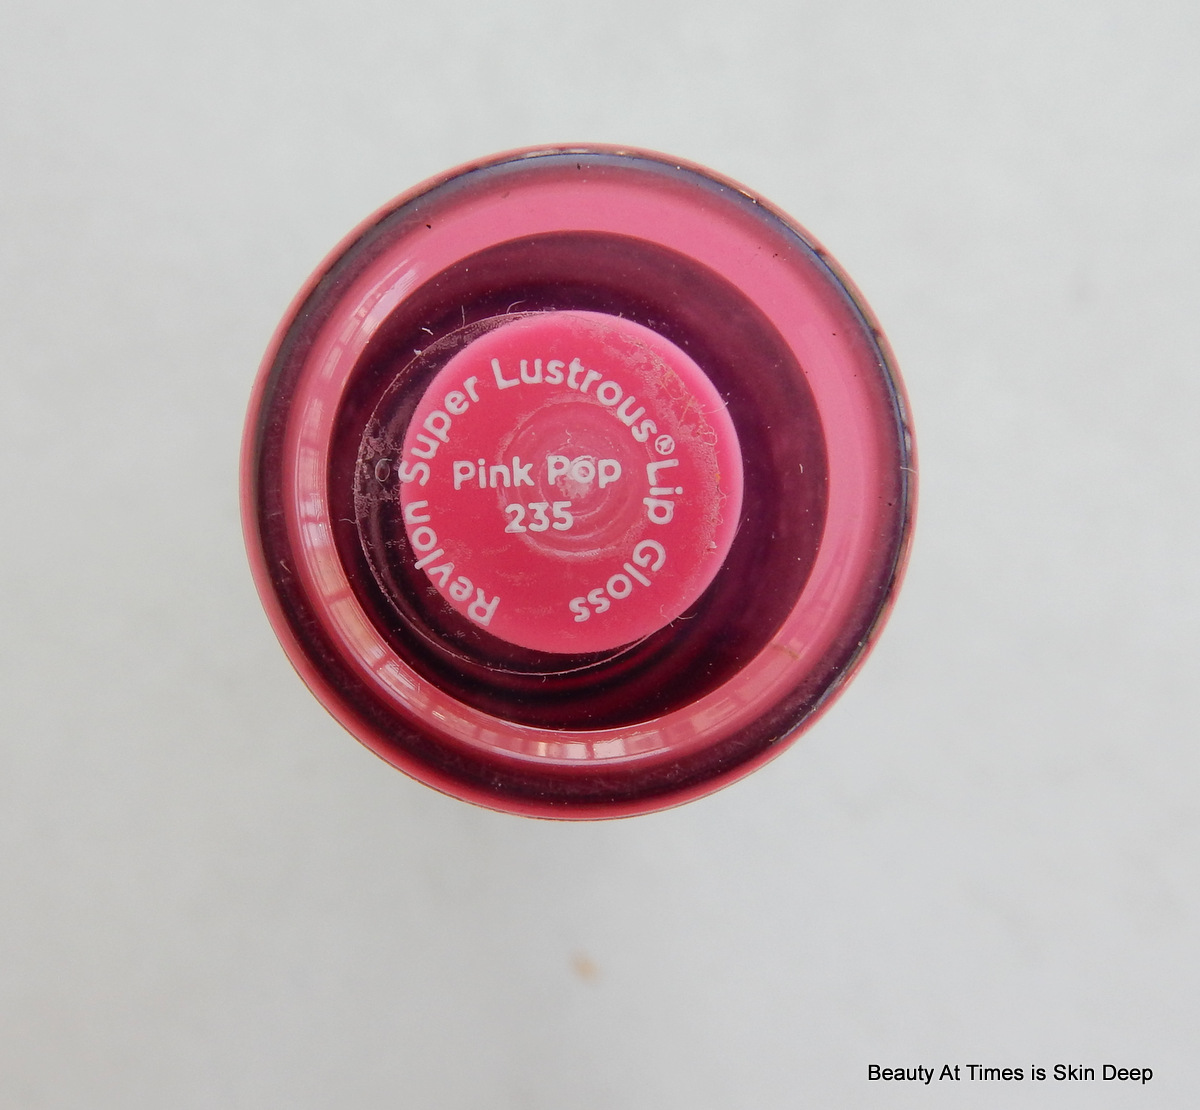 Fjerde generøsitet hat Beauty At Times is Skin Deep: Revlon Superlustrous Lipgloss in Pink Pop 235